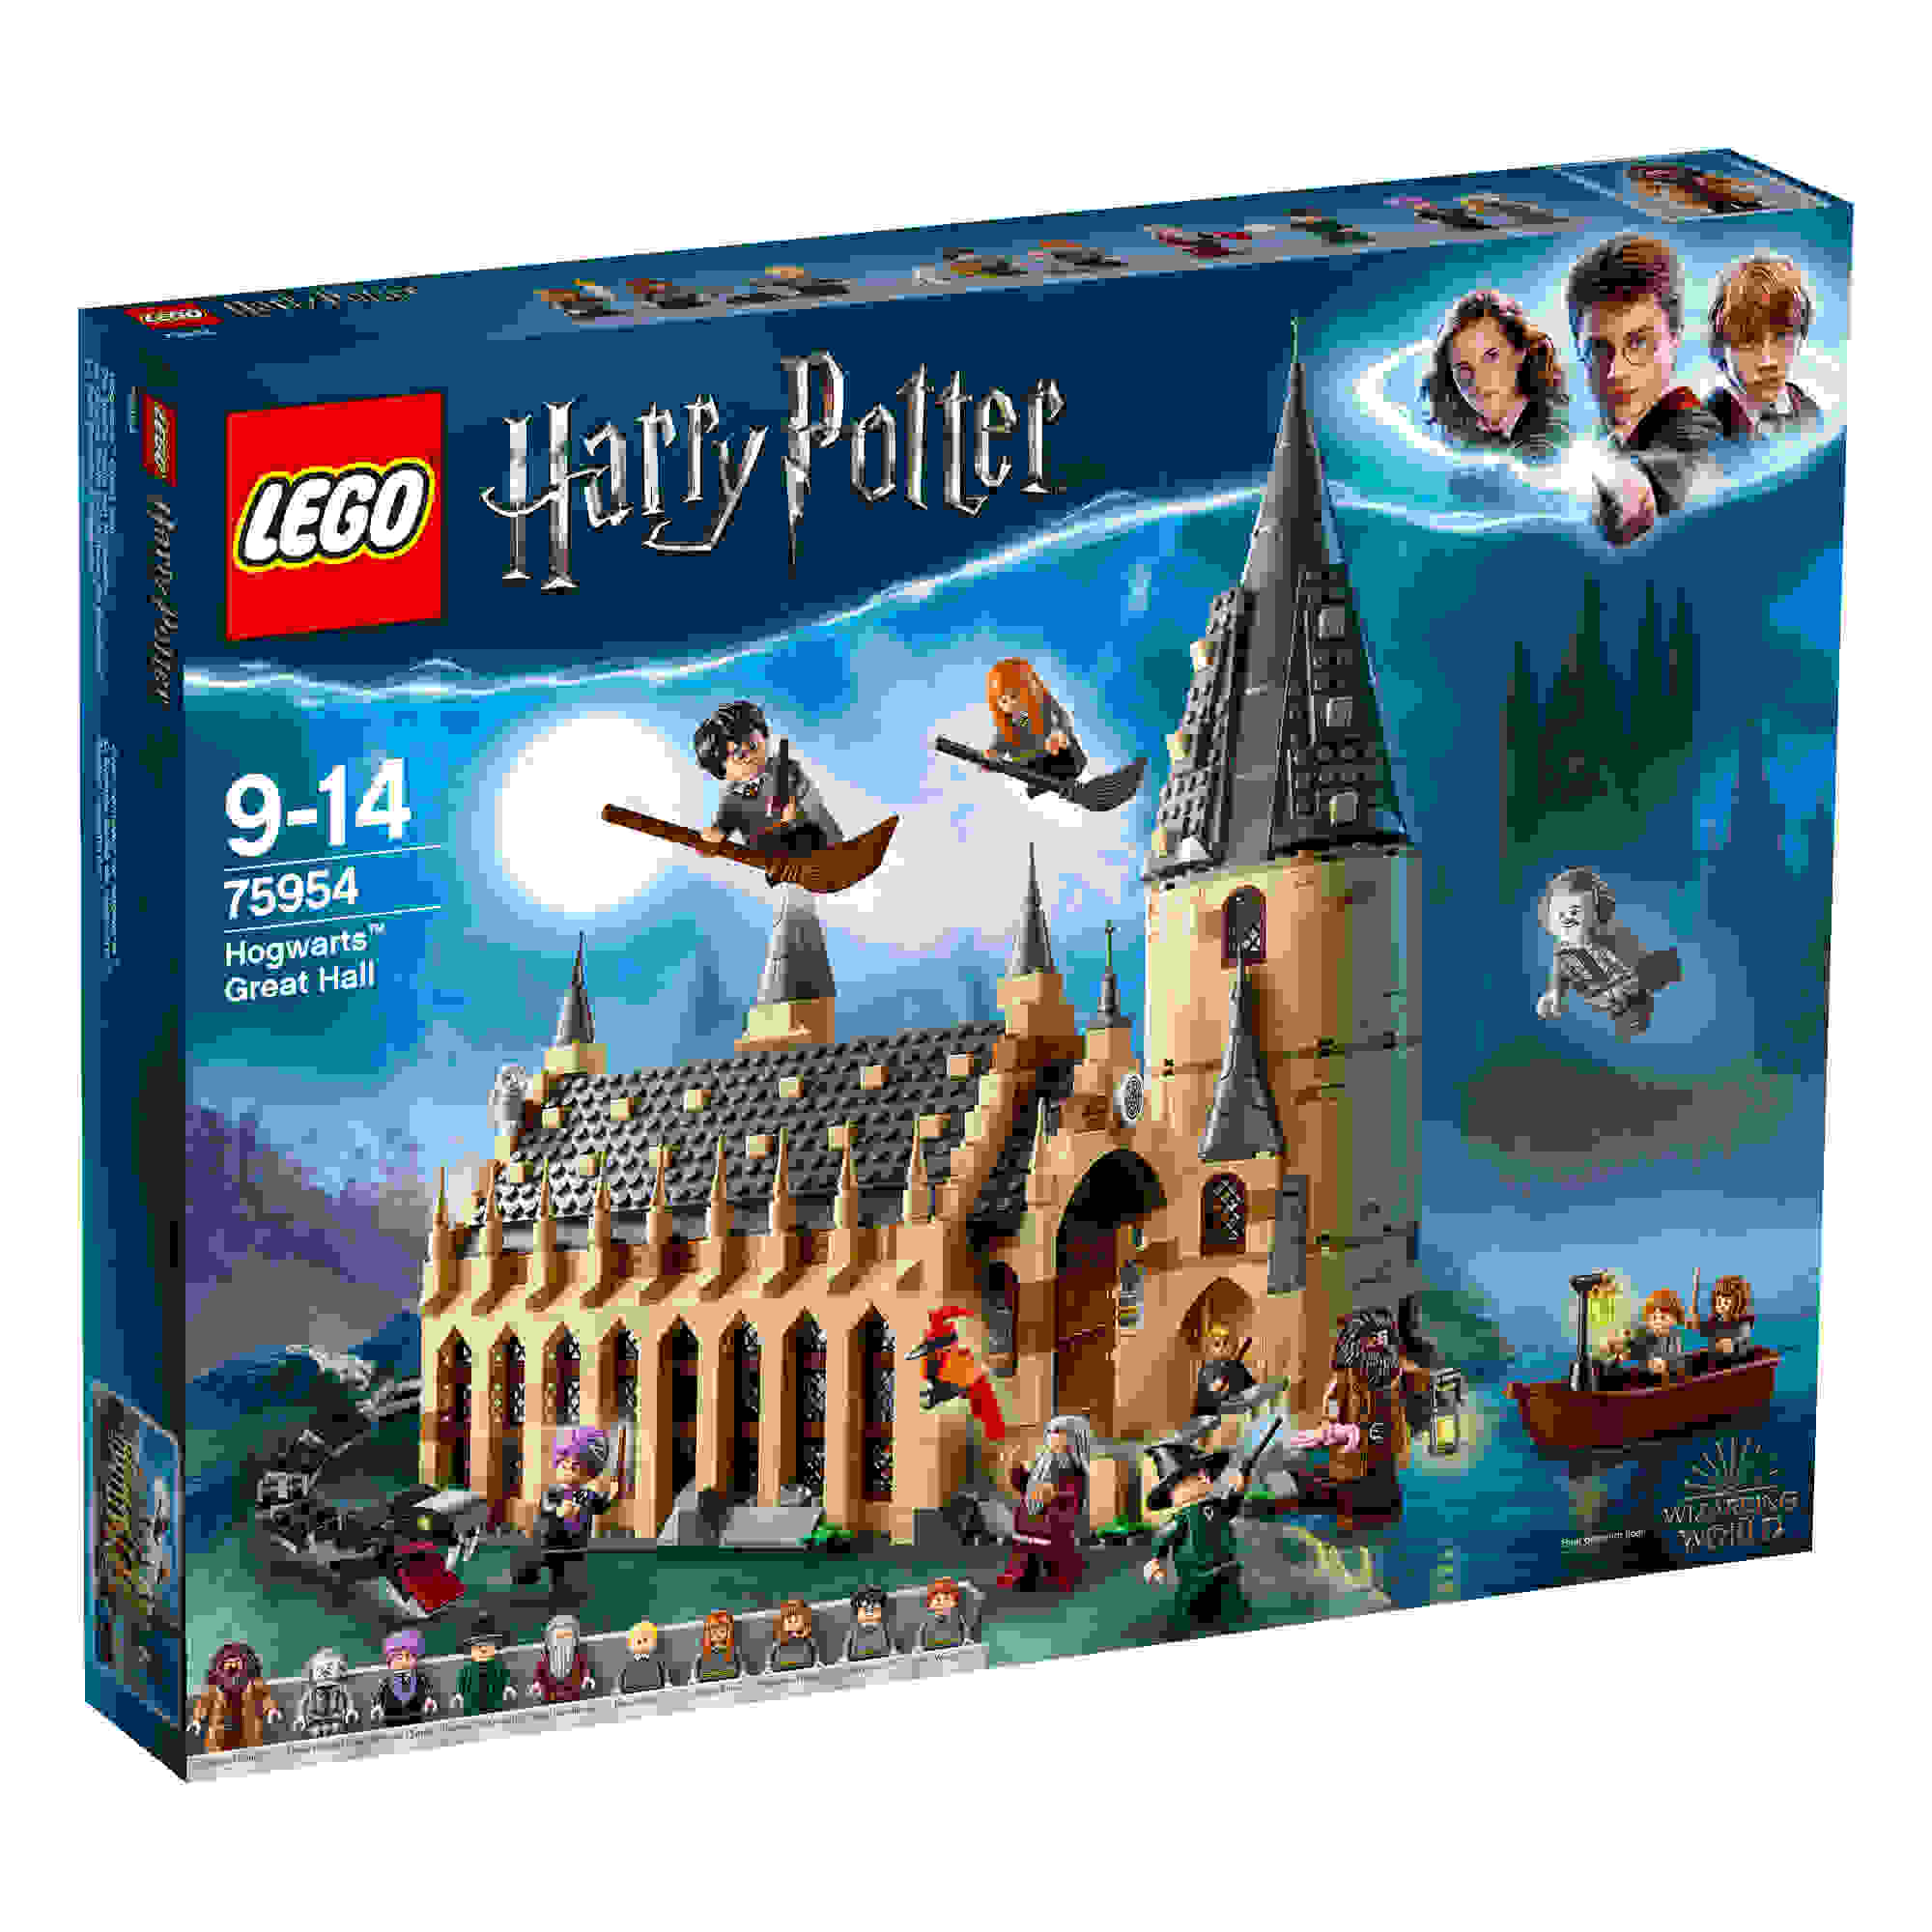 Harry potter lego hogwarts train